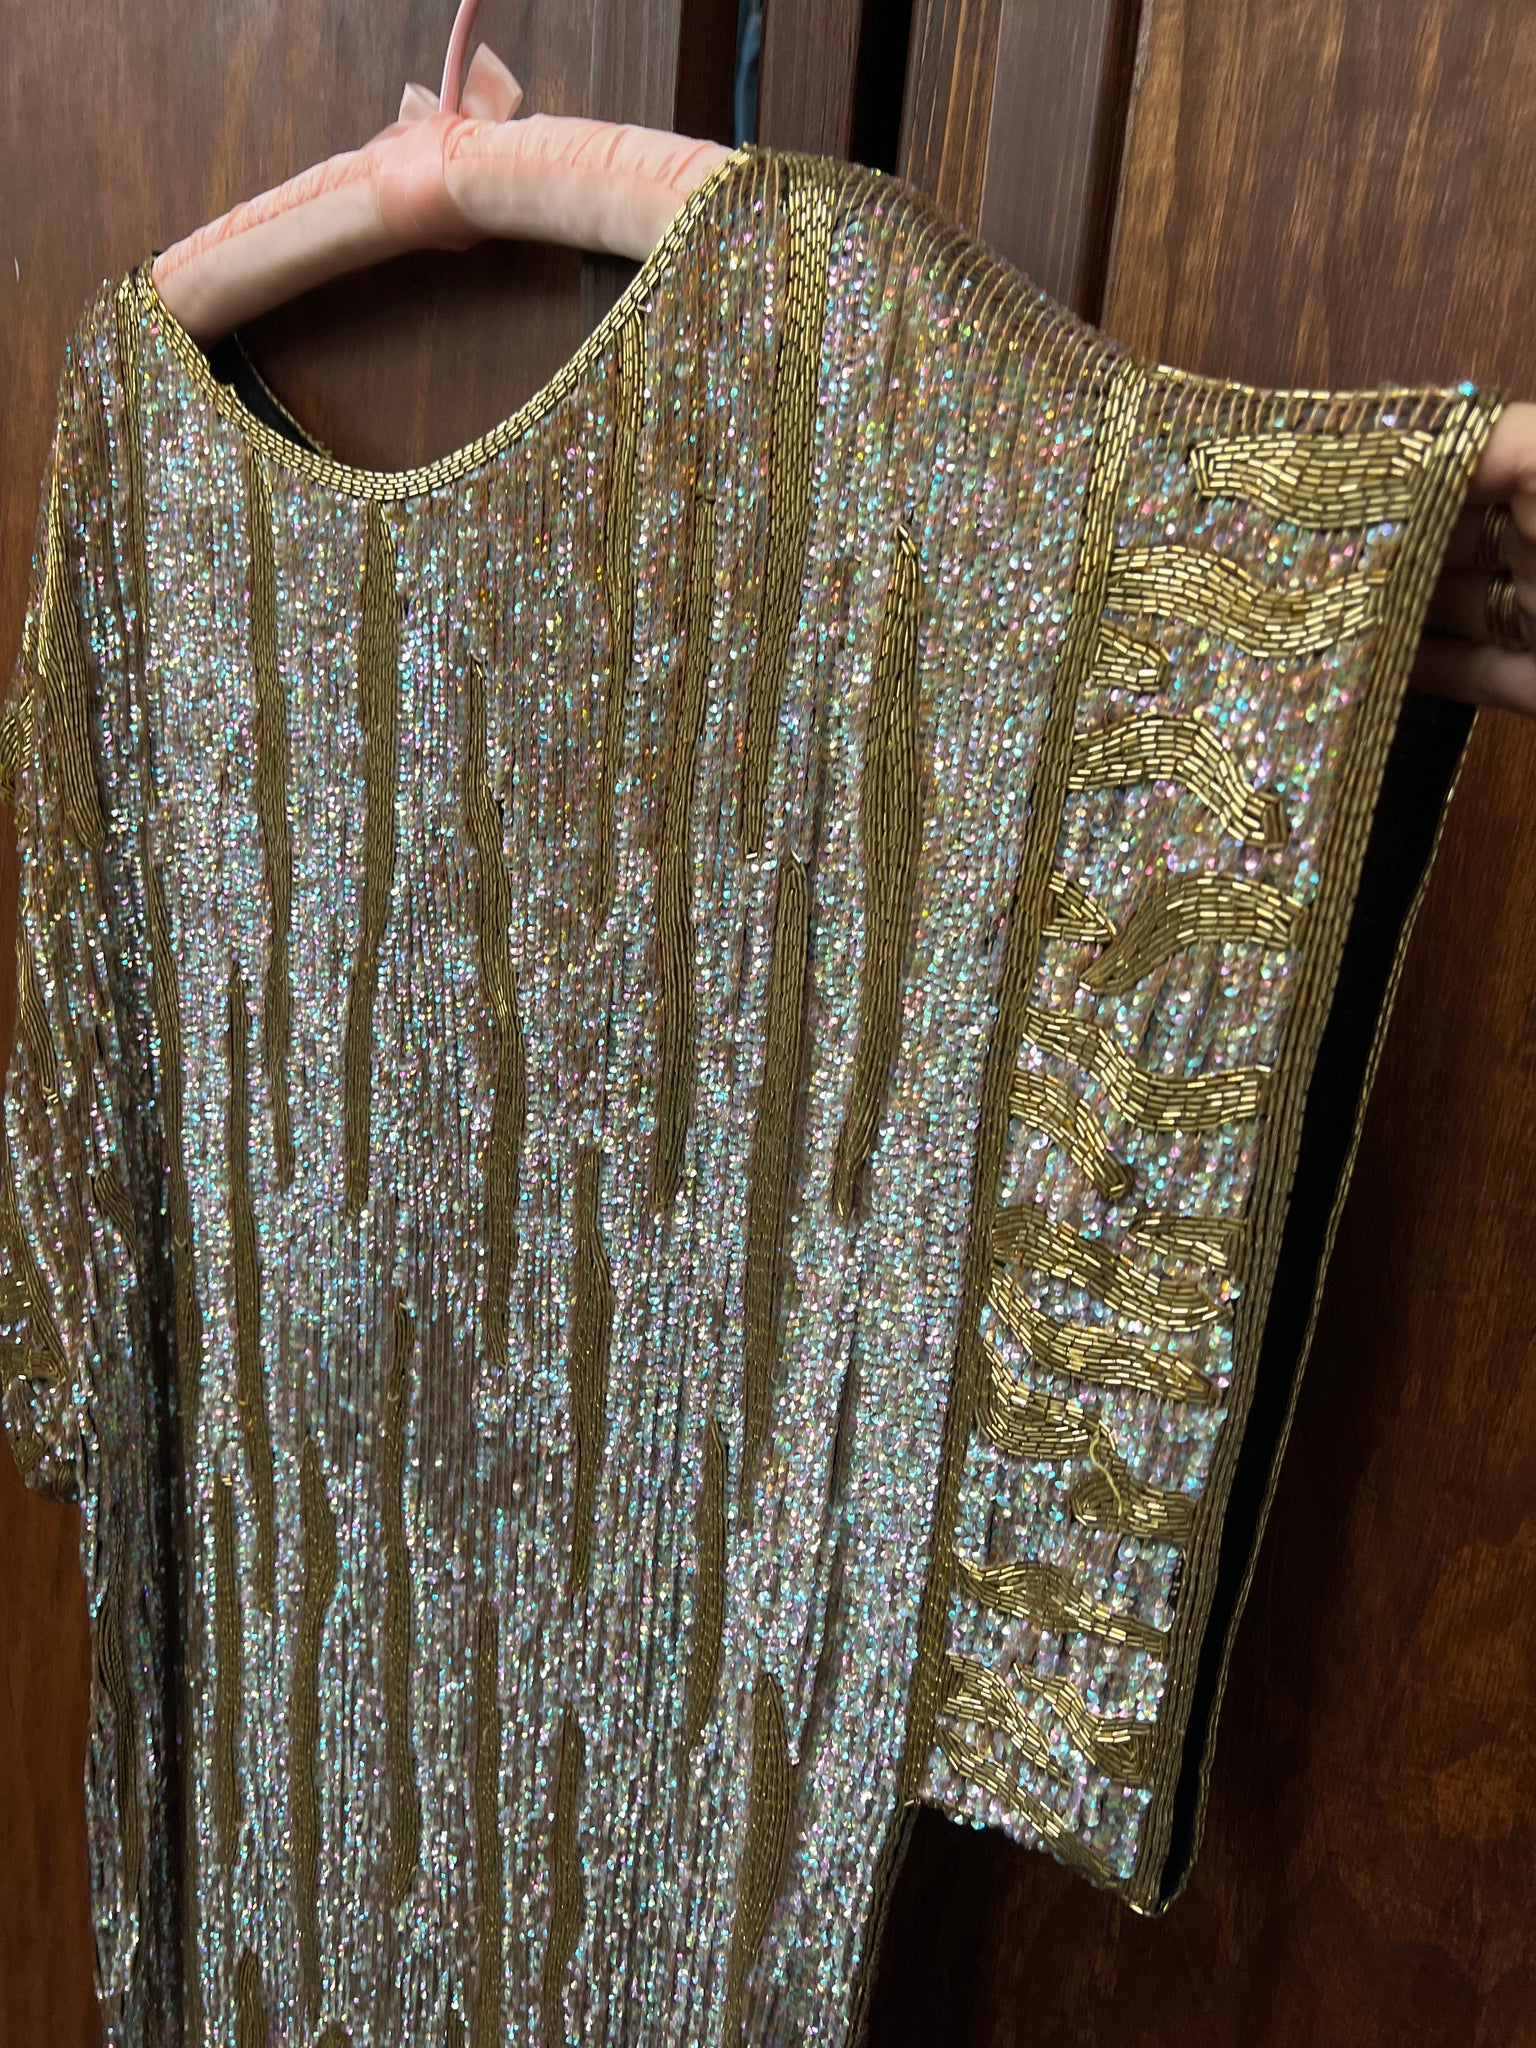 RENTAL 1960S Dress- gold beaded tunic